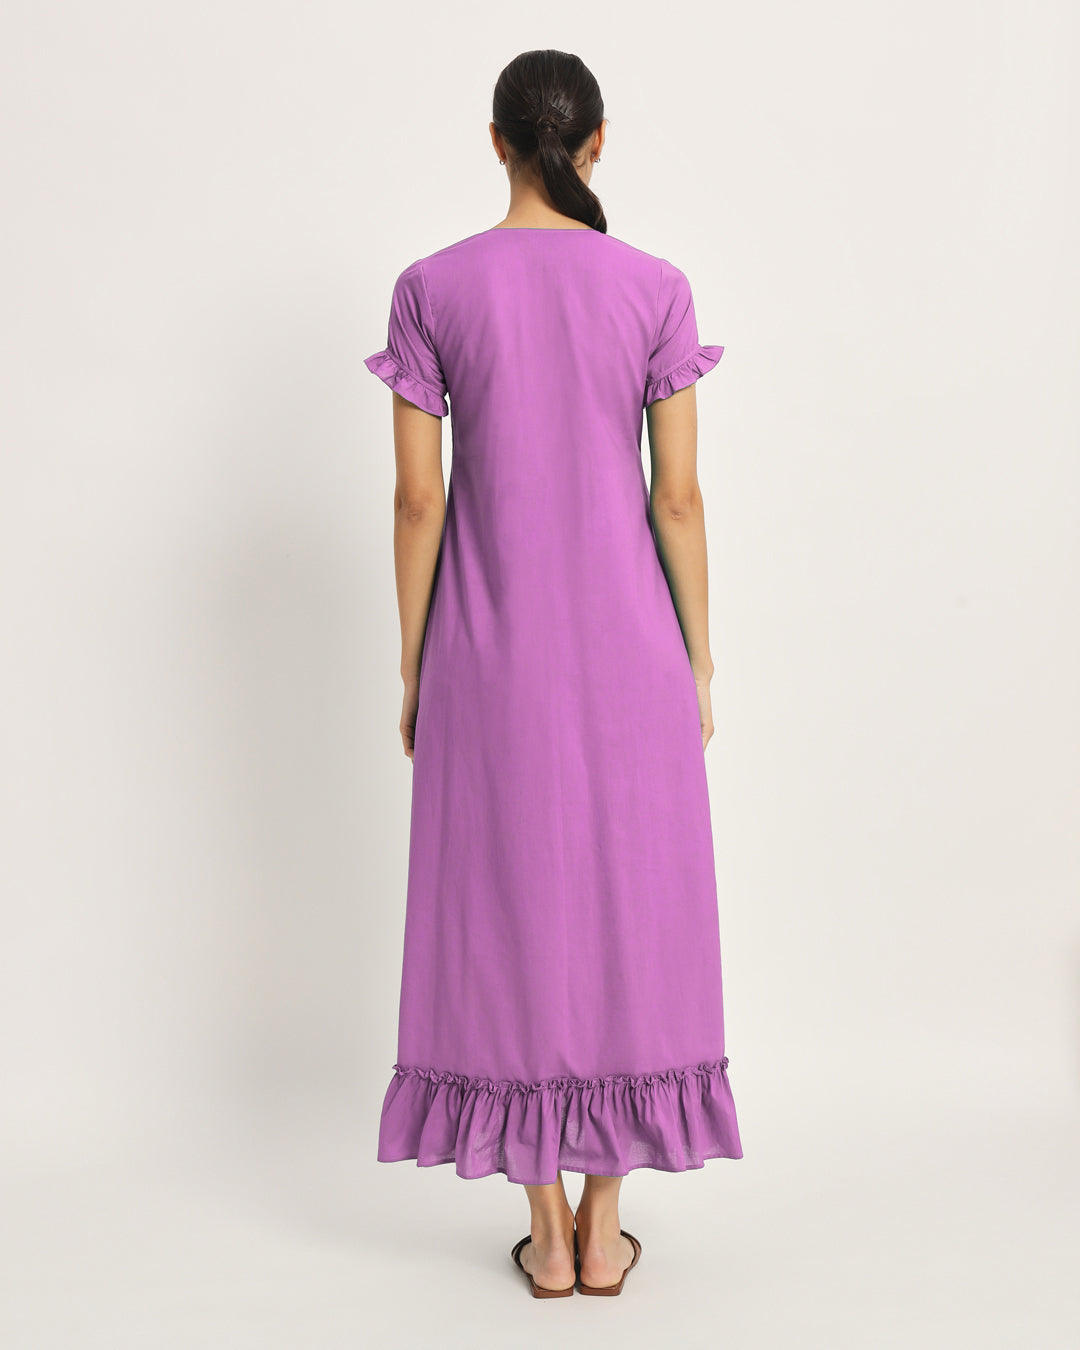 Combo: Sage Green & Wisteria Purple Bumpin' & Stylin' Maternity & Nursing Dress - Set of 2